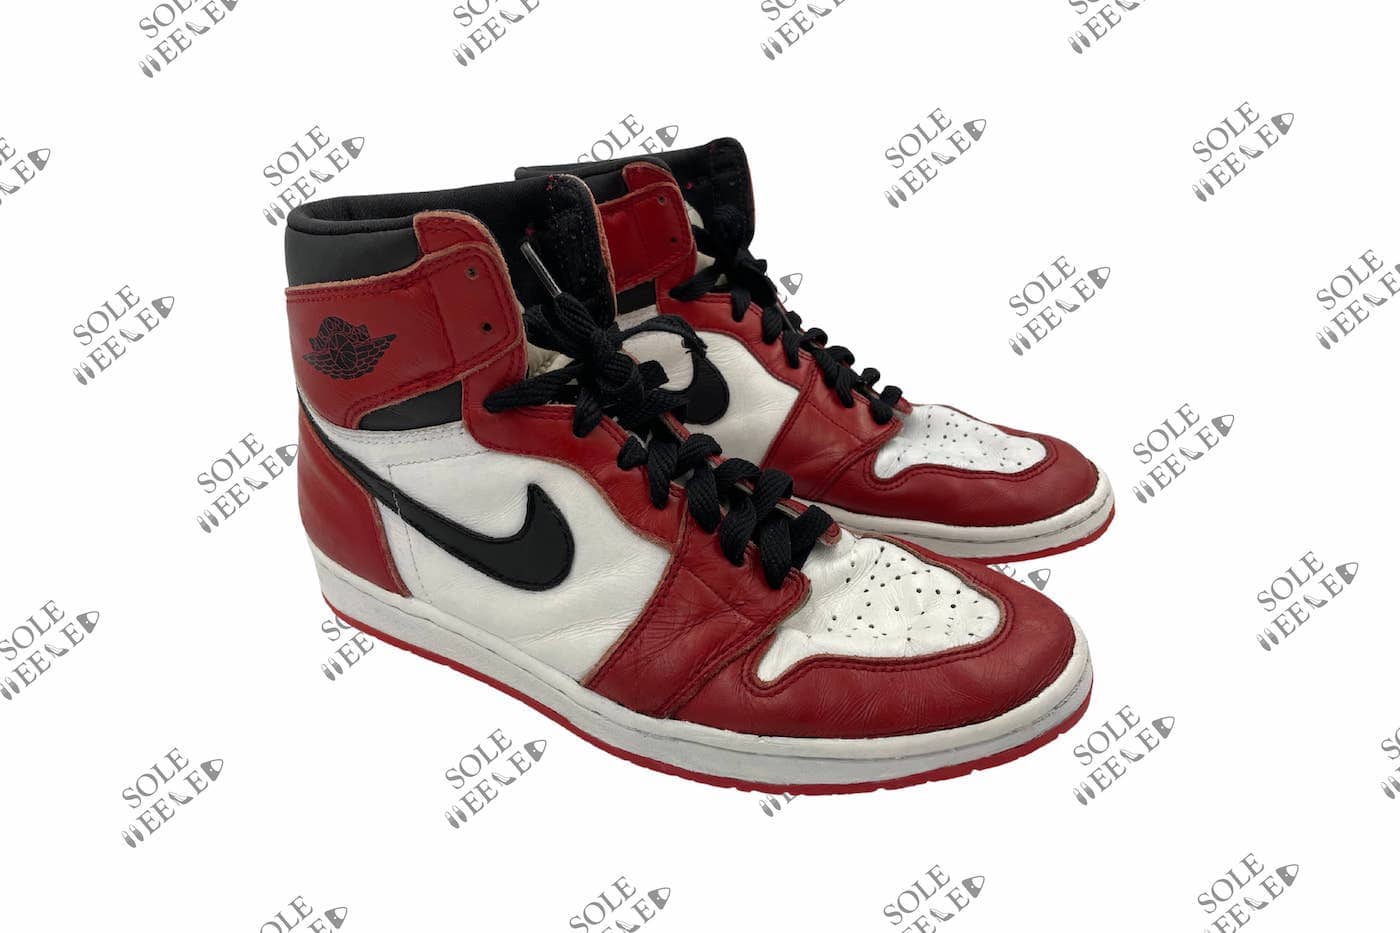 Jordan Sneaker Resole and Colour Restoration